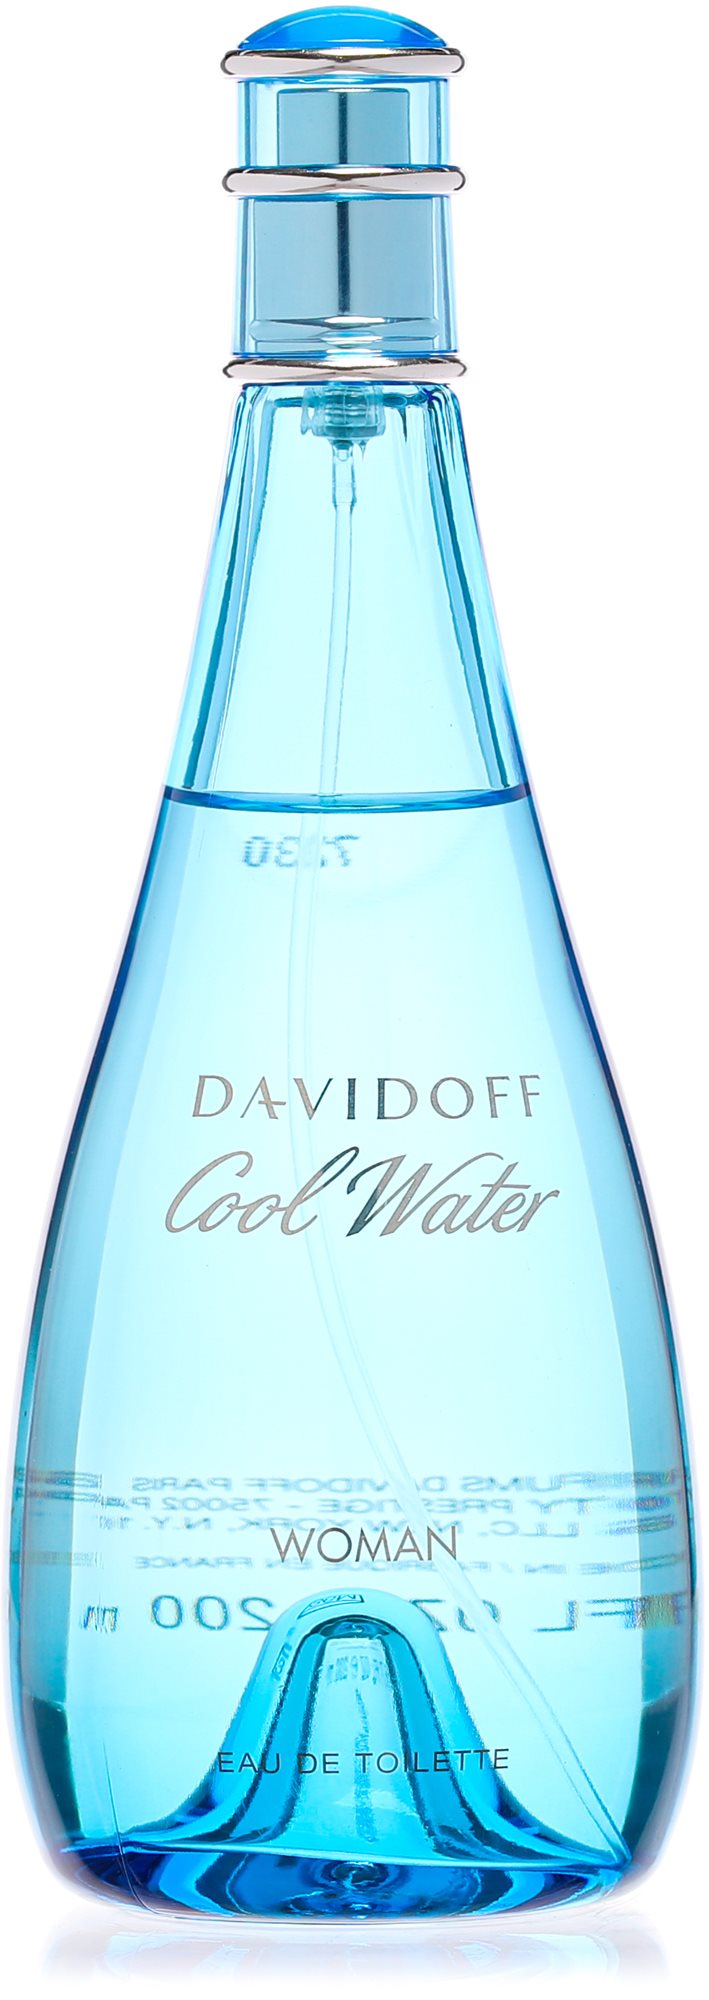 DAVIDOFF Cool Water Woman EdT 200 ml